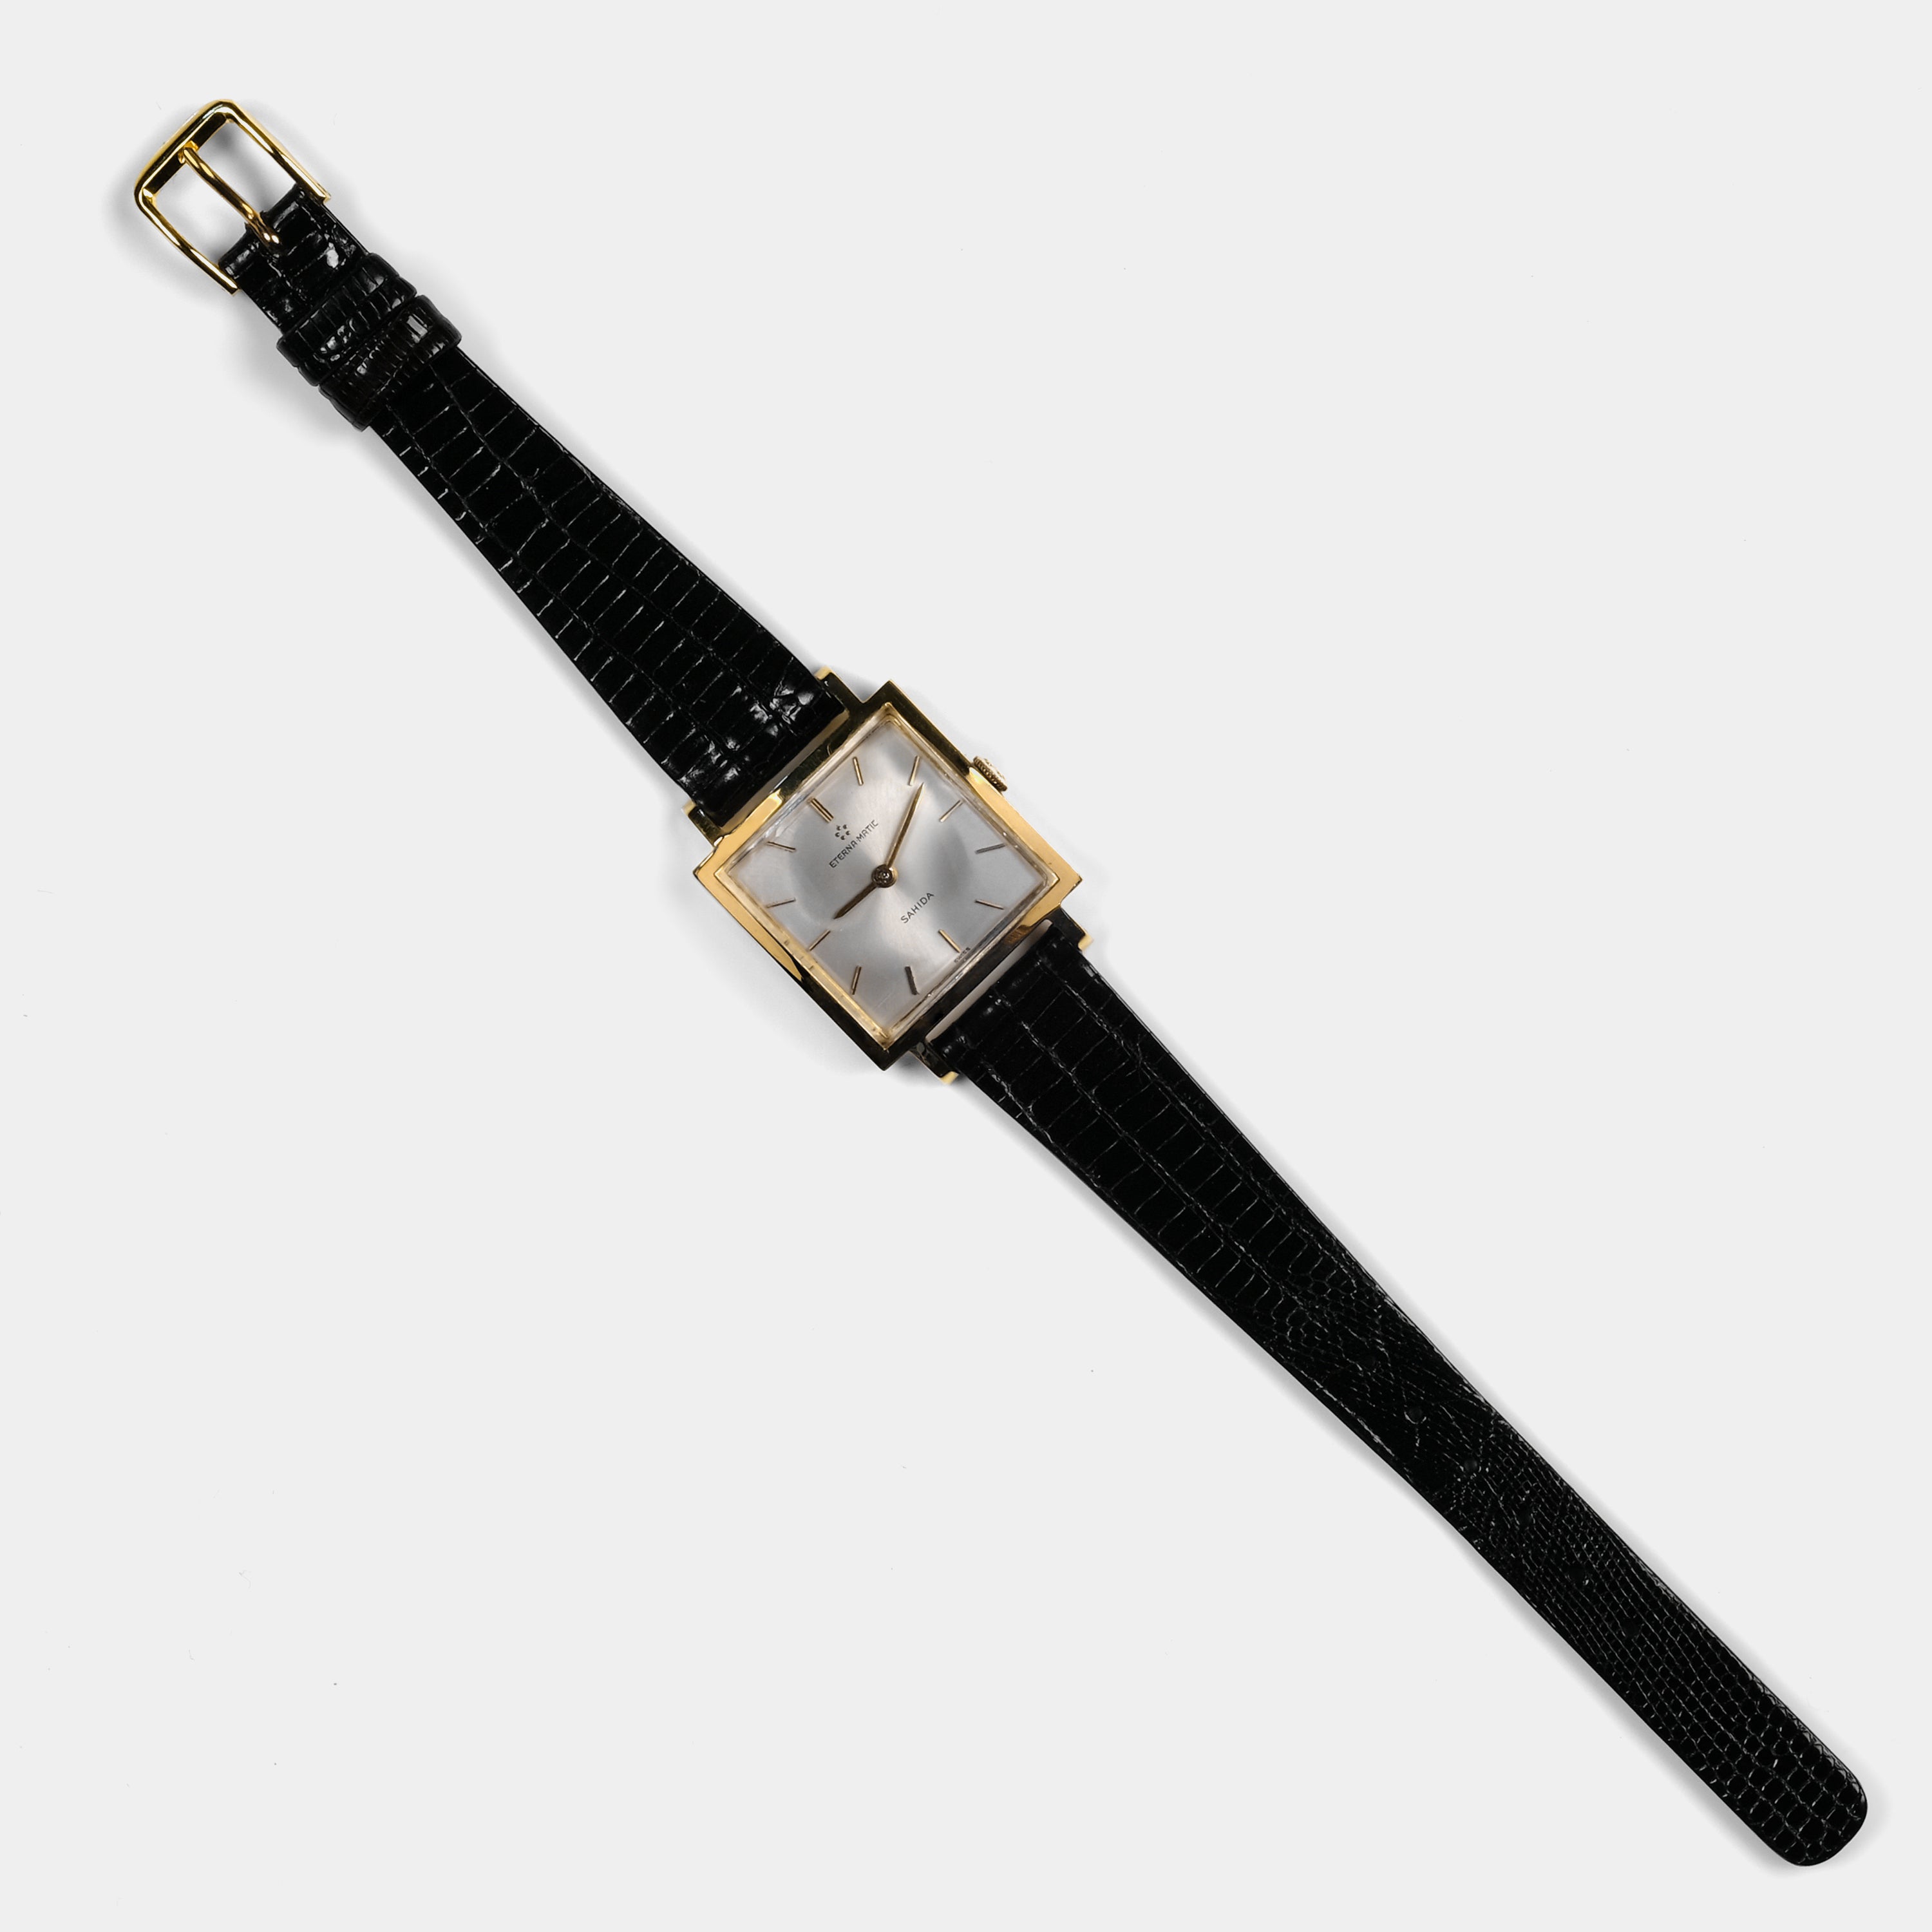 Eterna-Matic Sahida ref. 765 Automatic Circa 1962 Wristwatch